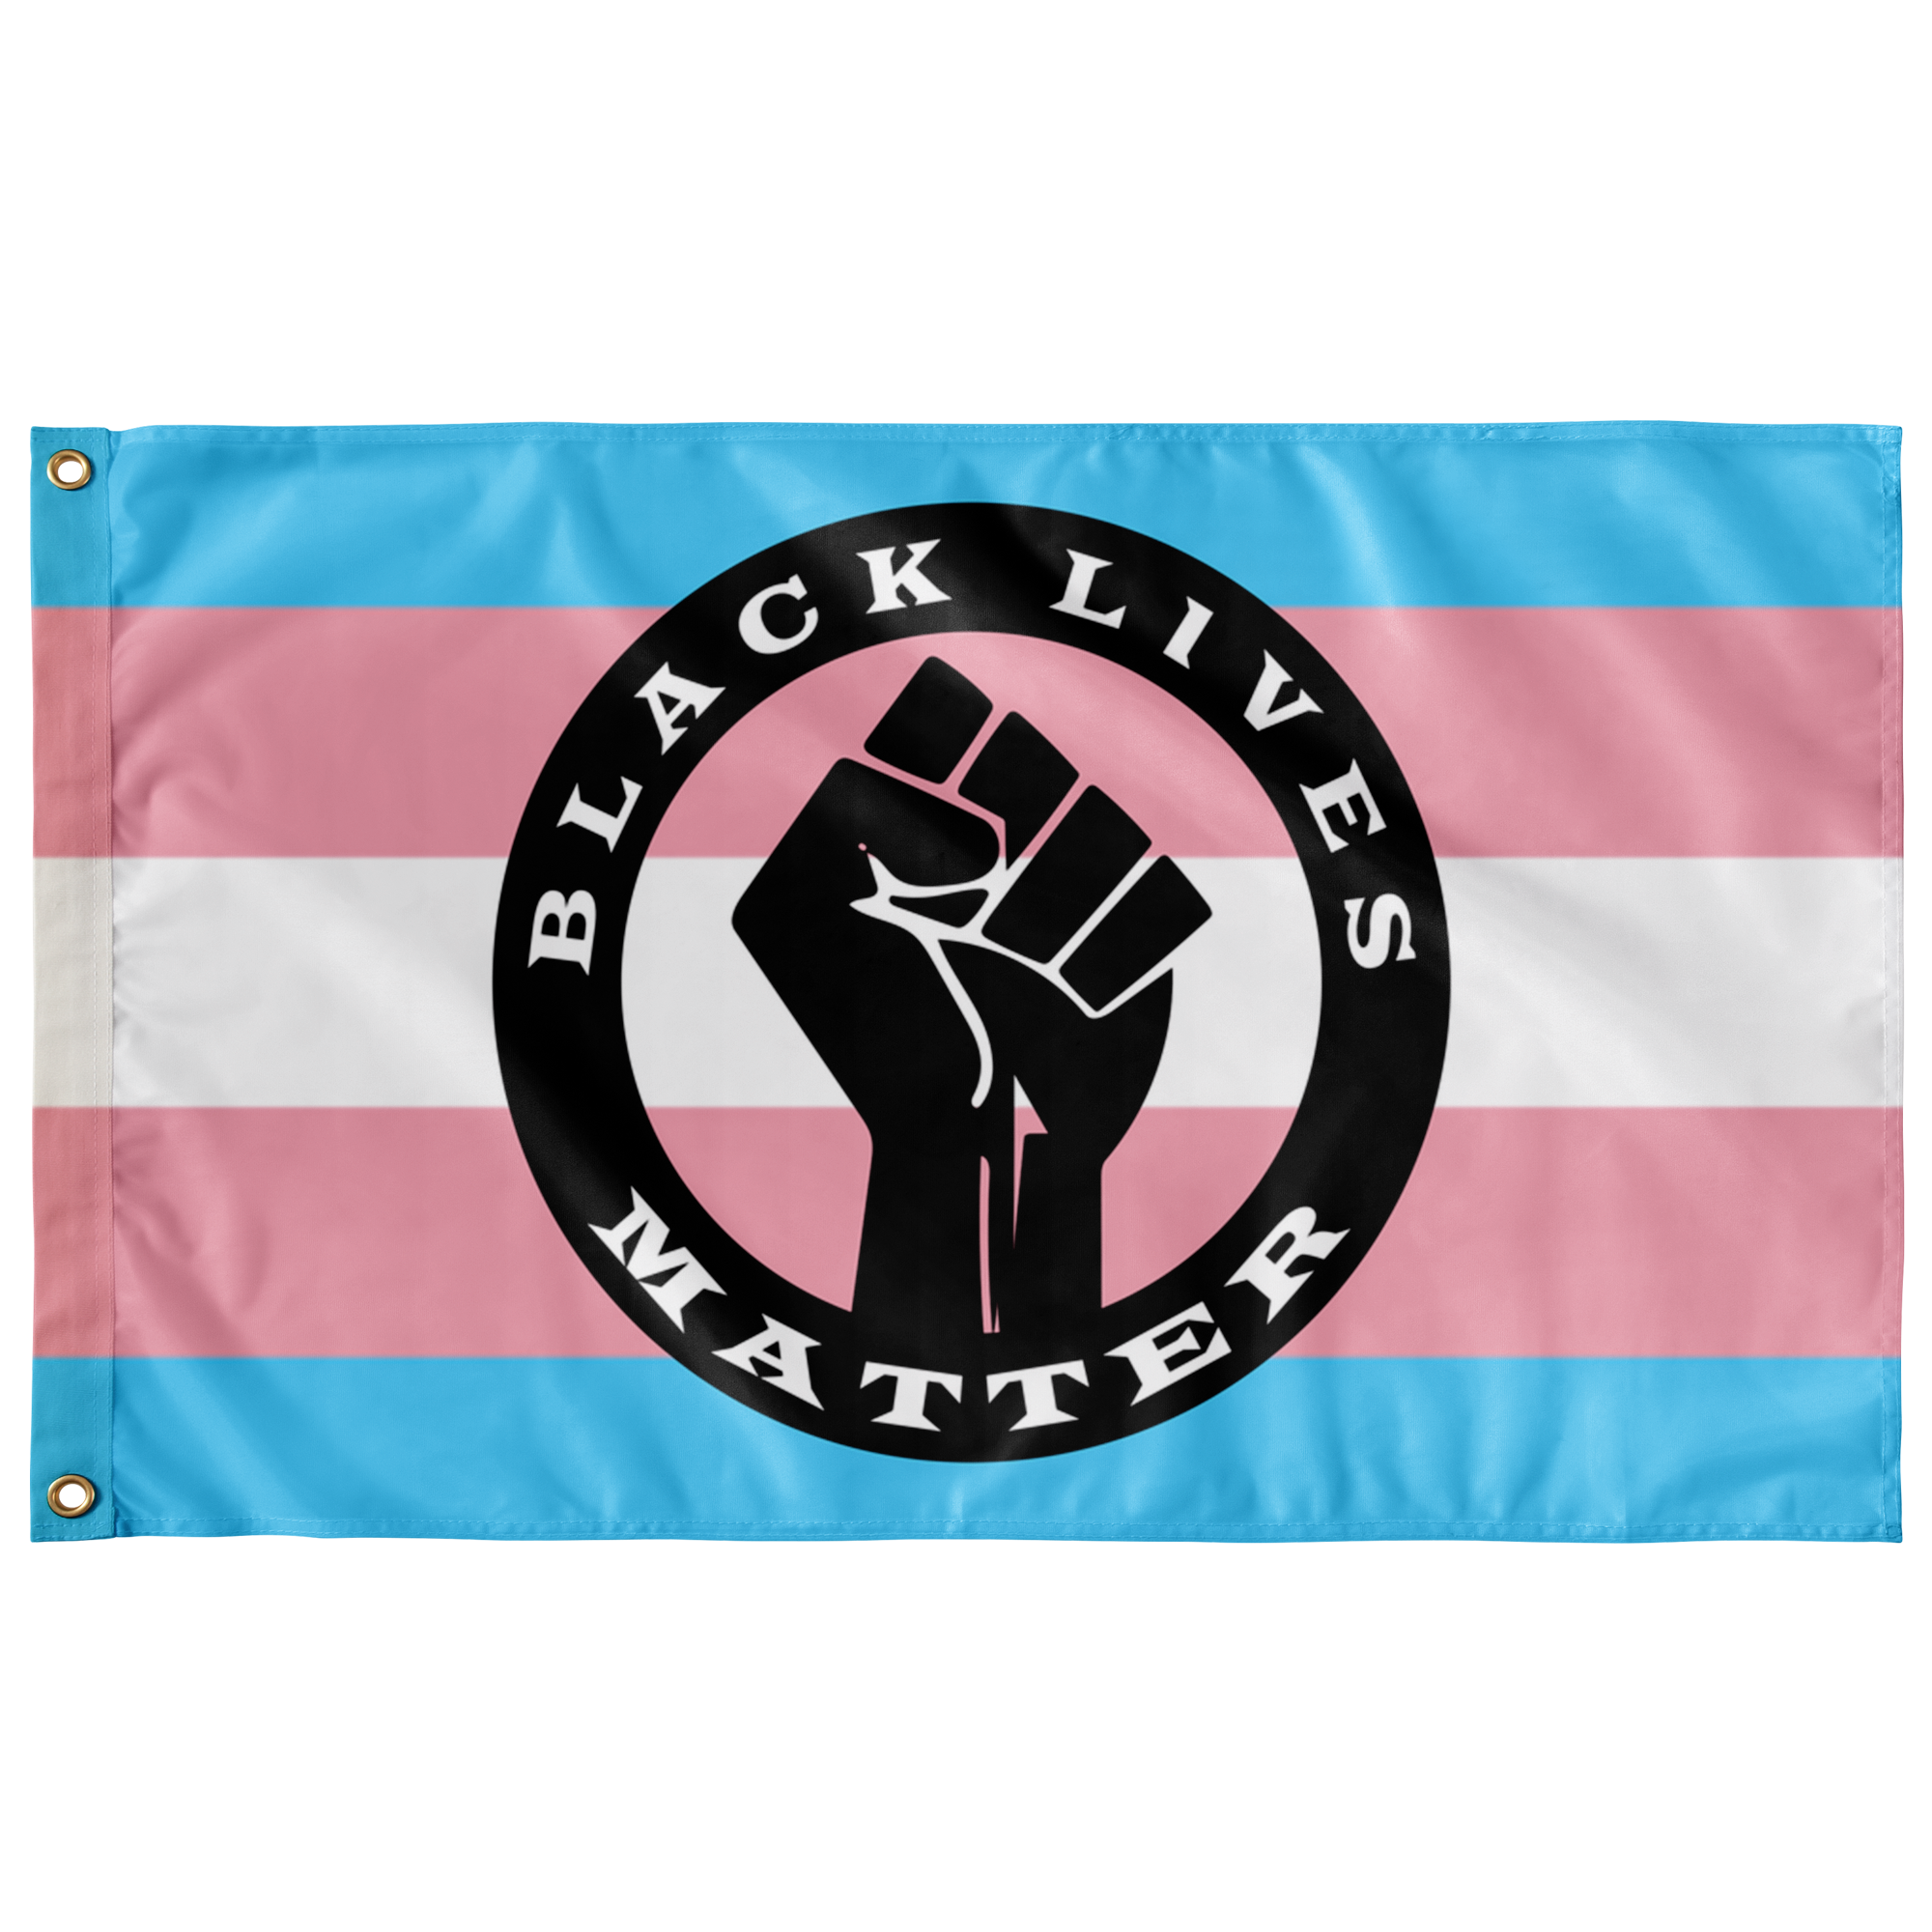 Transgender Black Lives Matter Flag LGBT BLM Flags  - Gemmed Firefly